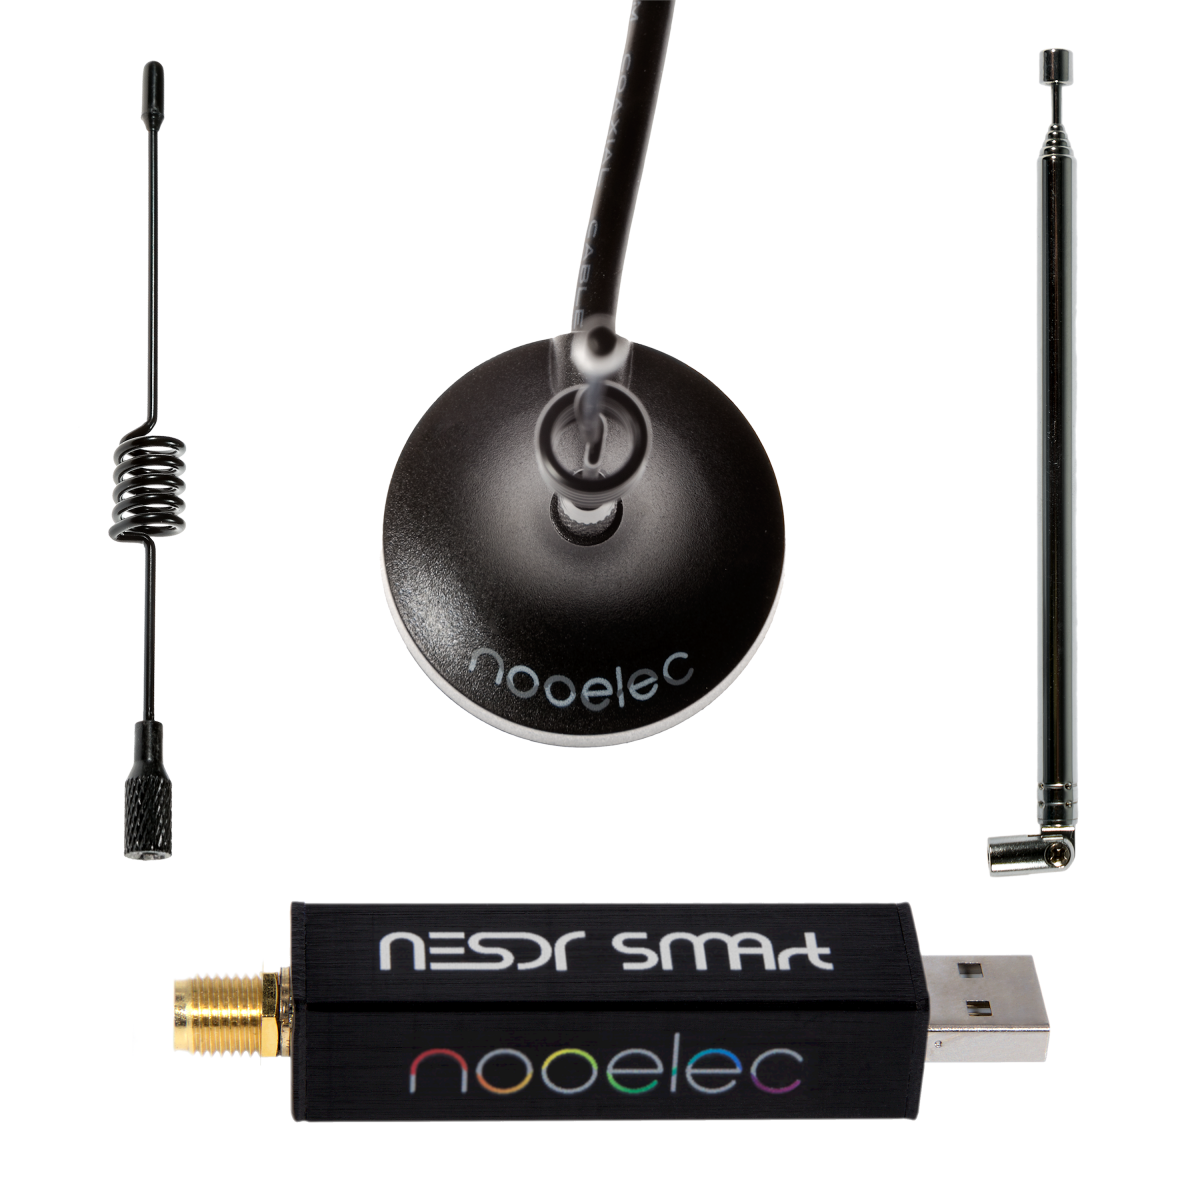 Nooelec - Nooelec NESDR SMArt v5 Bundle - HF/VHF/UHF () RTL- SDR Kit with 3 Antennas. RTL2832U & R820T2-Based Software Defined Radio